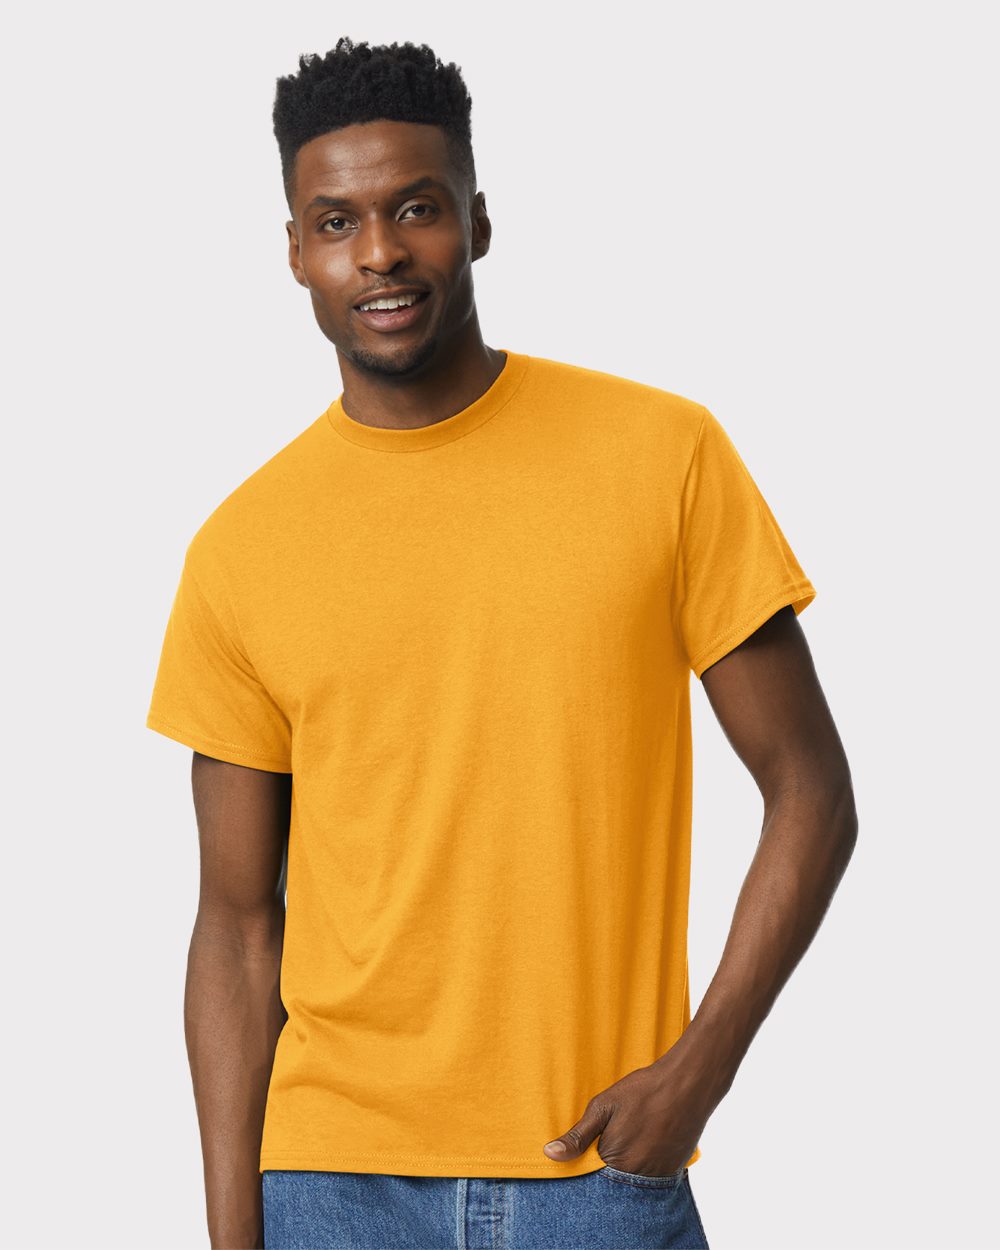 Orange Shirt for Men - Gildan 2000 - Men T-Shirt Cotton Men Shirt